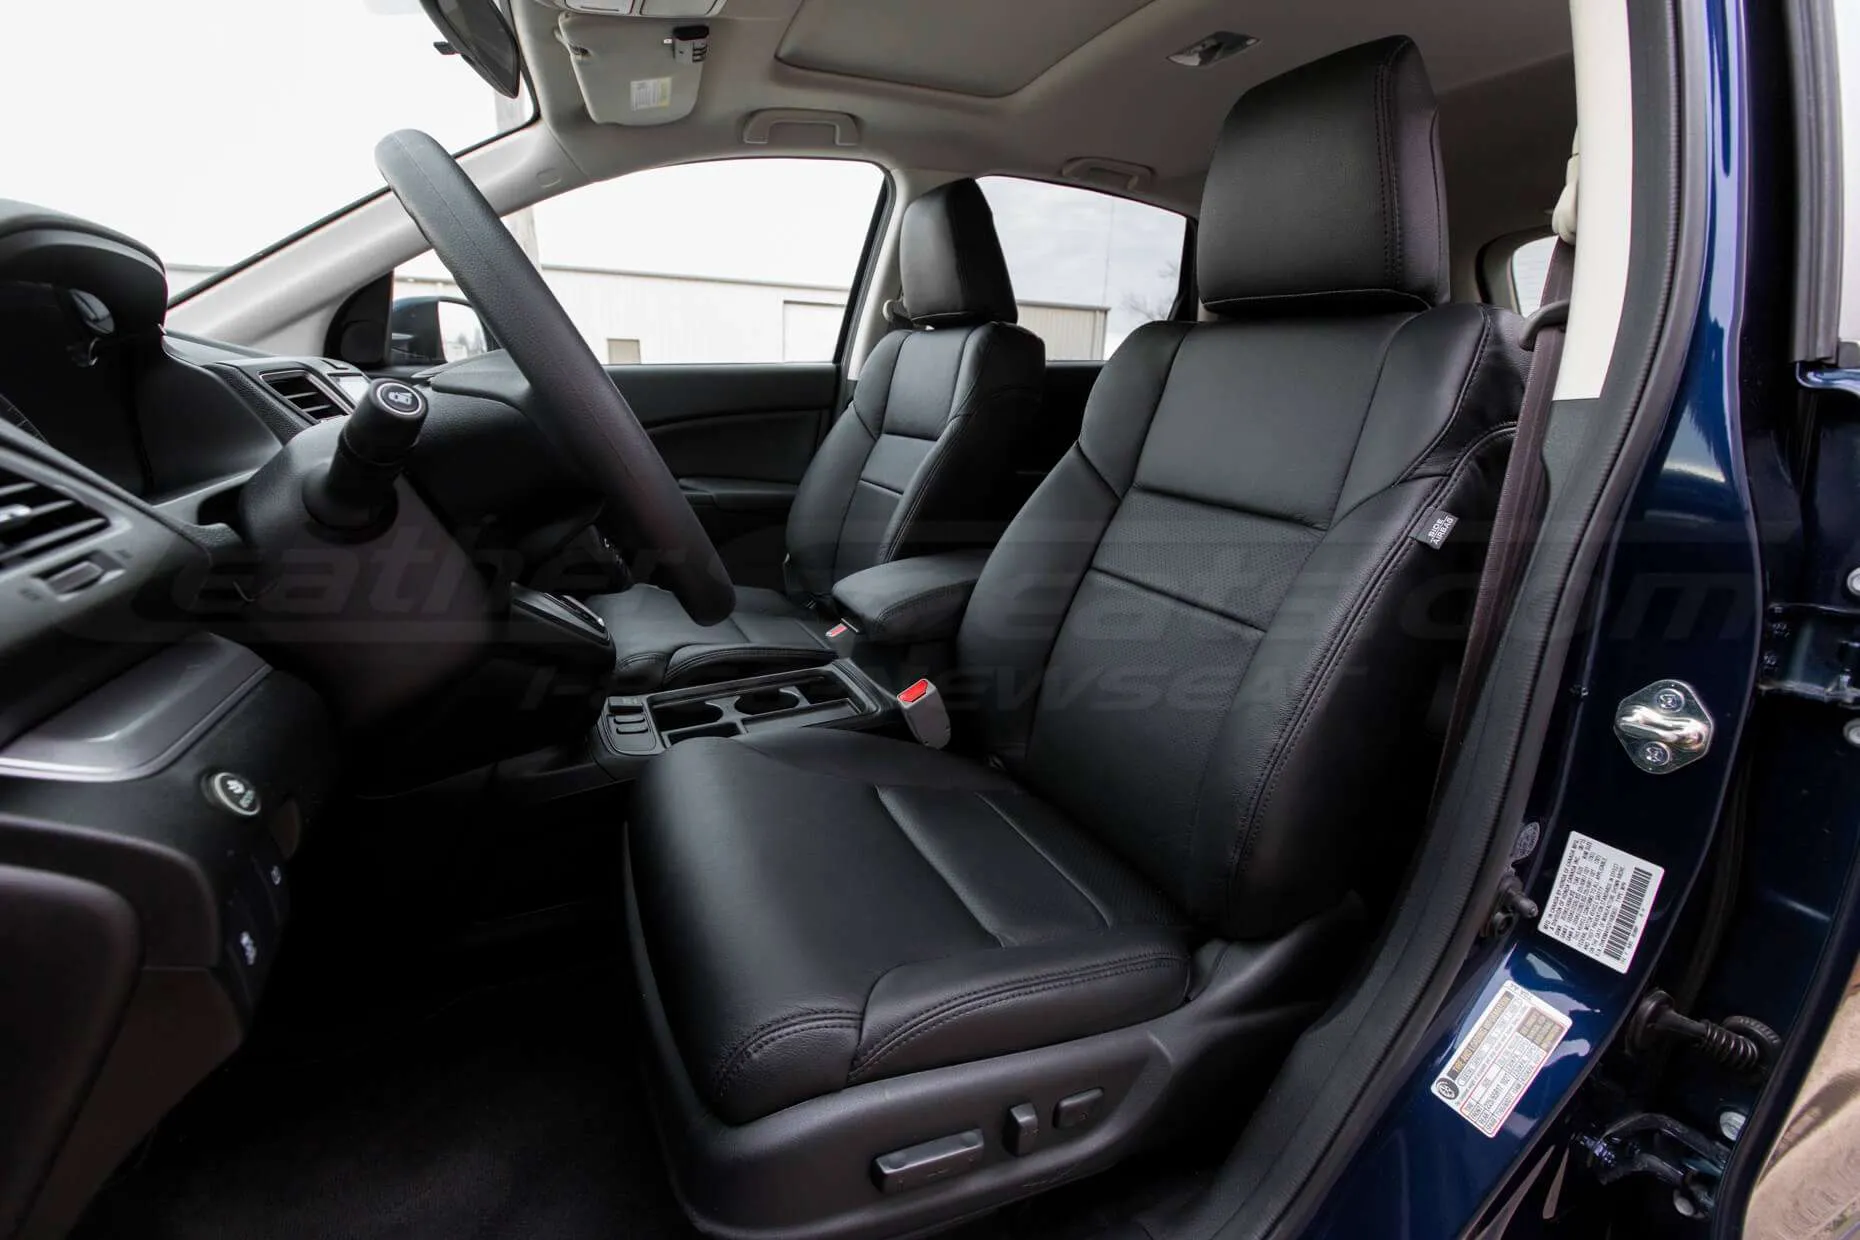 2022 Honda CRV Black Edition  Interior  Exterior  Honda CRV  YouTube